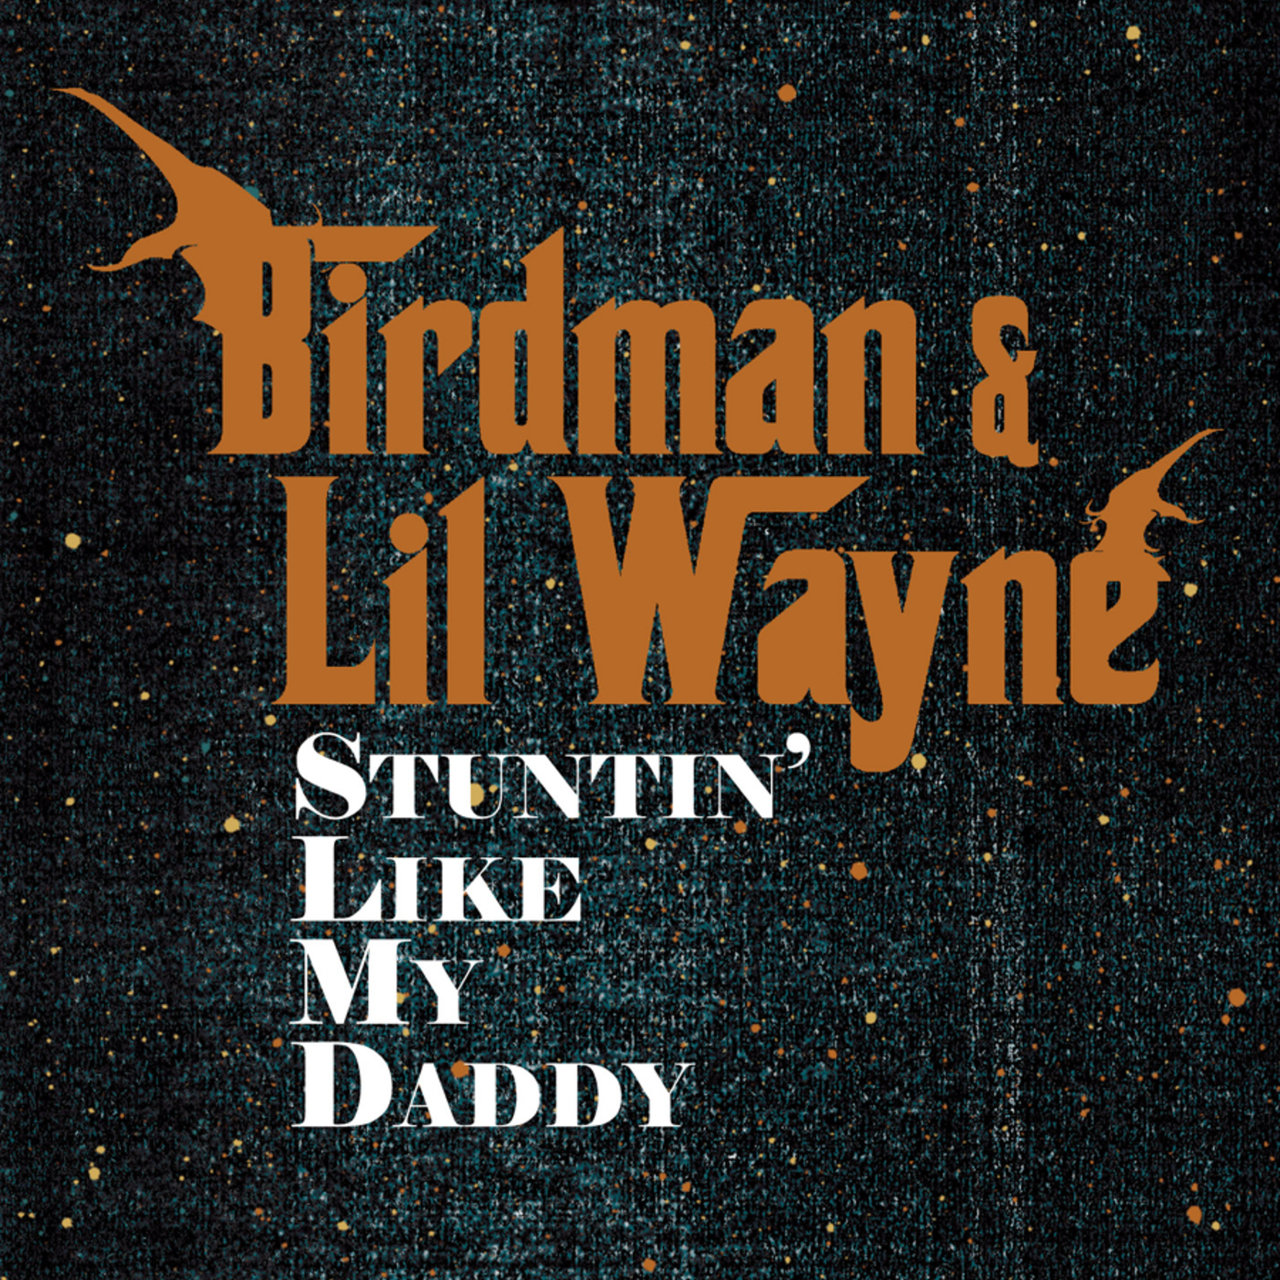 Birdman and Lil Wayne - Stuntin' Like My Daddy (Cover)